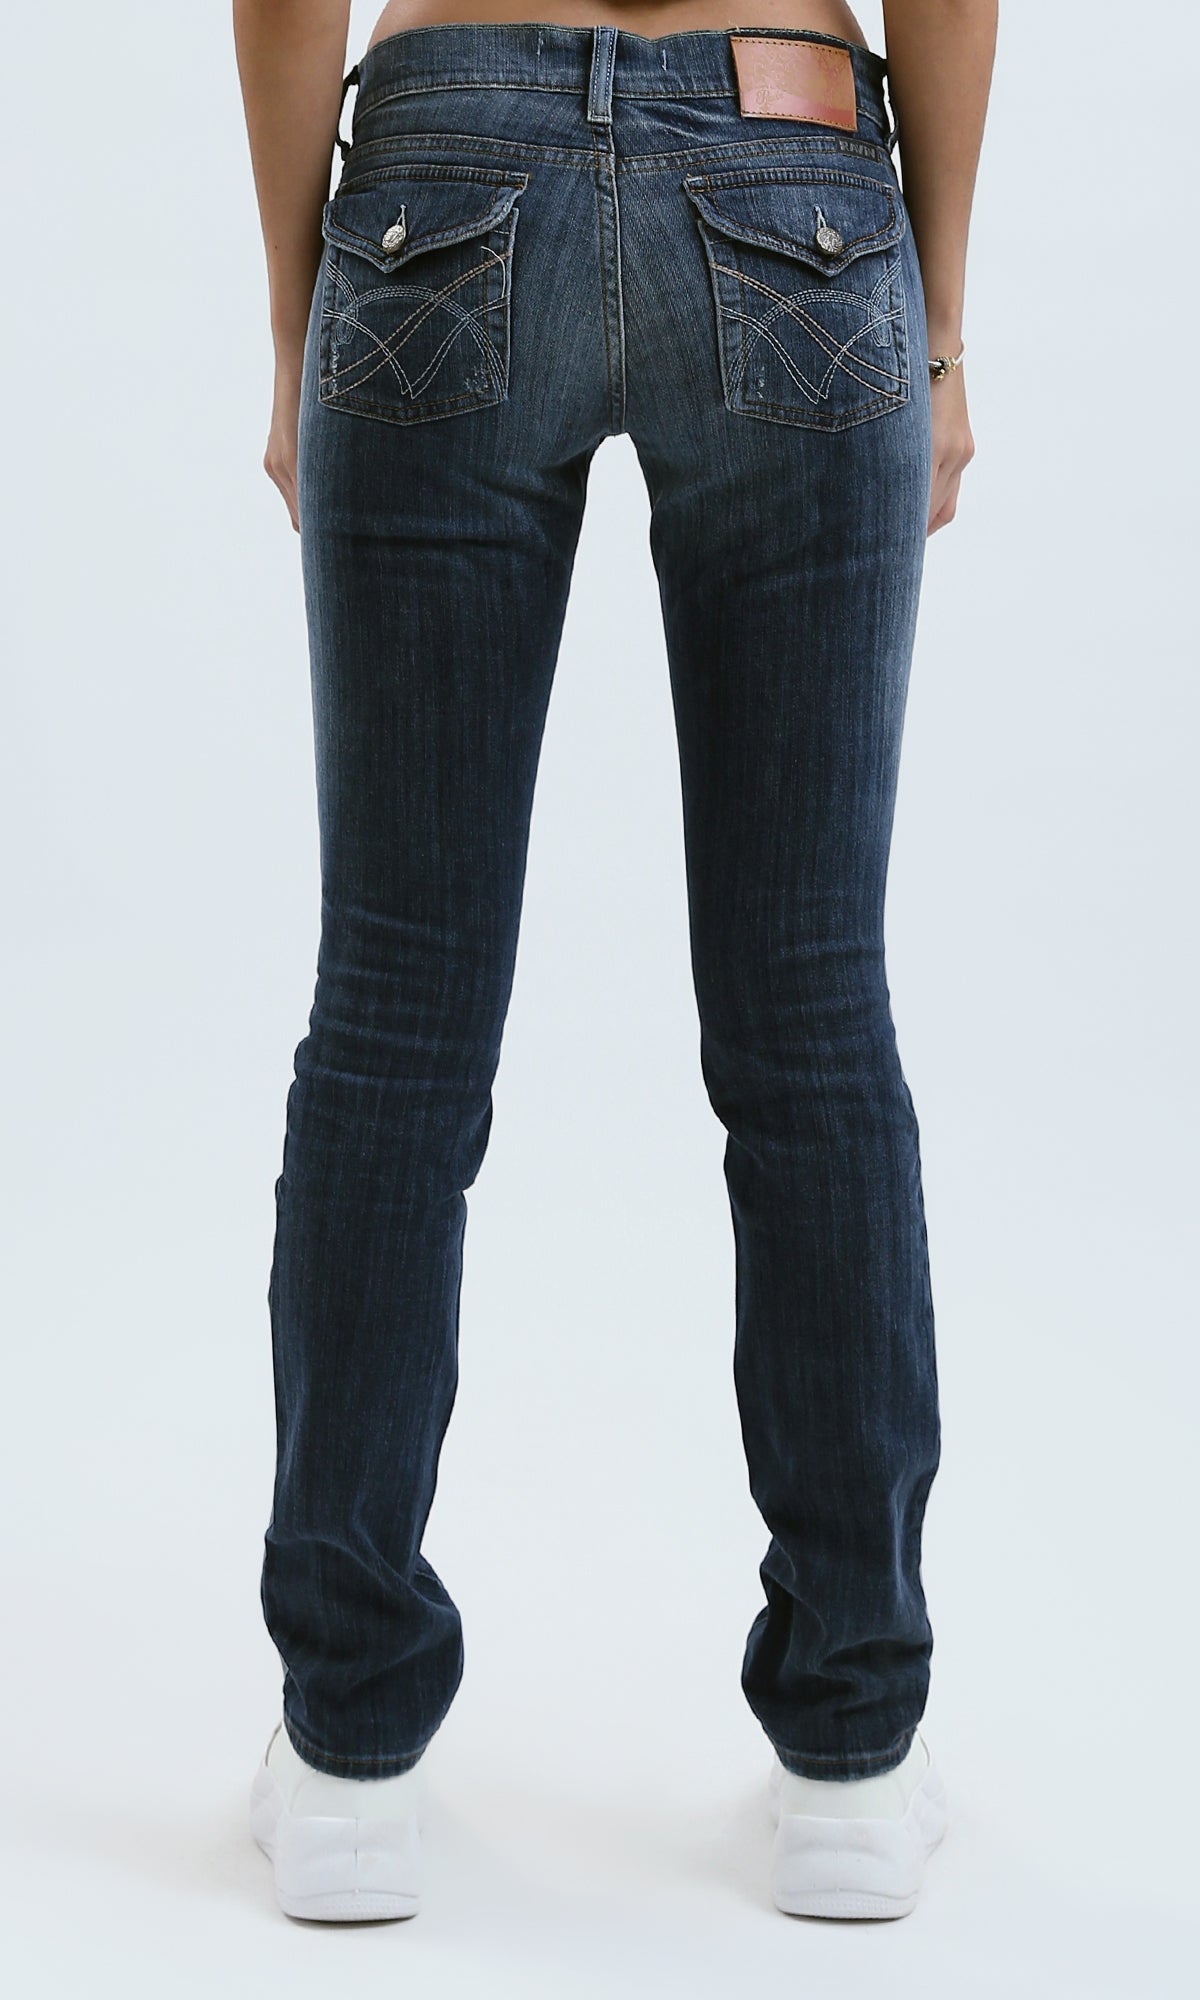 O191701 Frauenhose Jeans